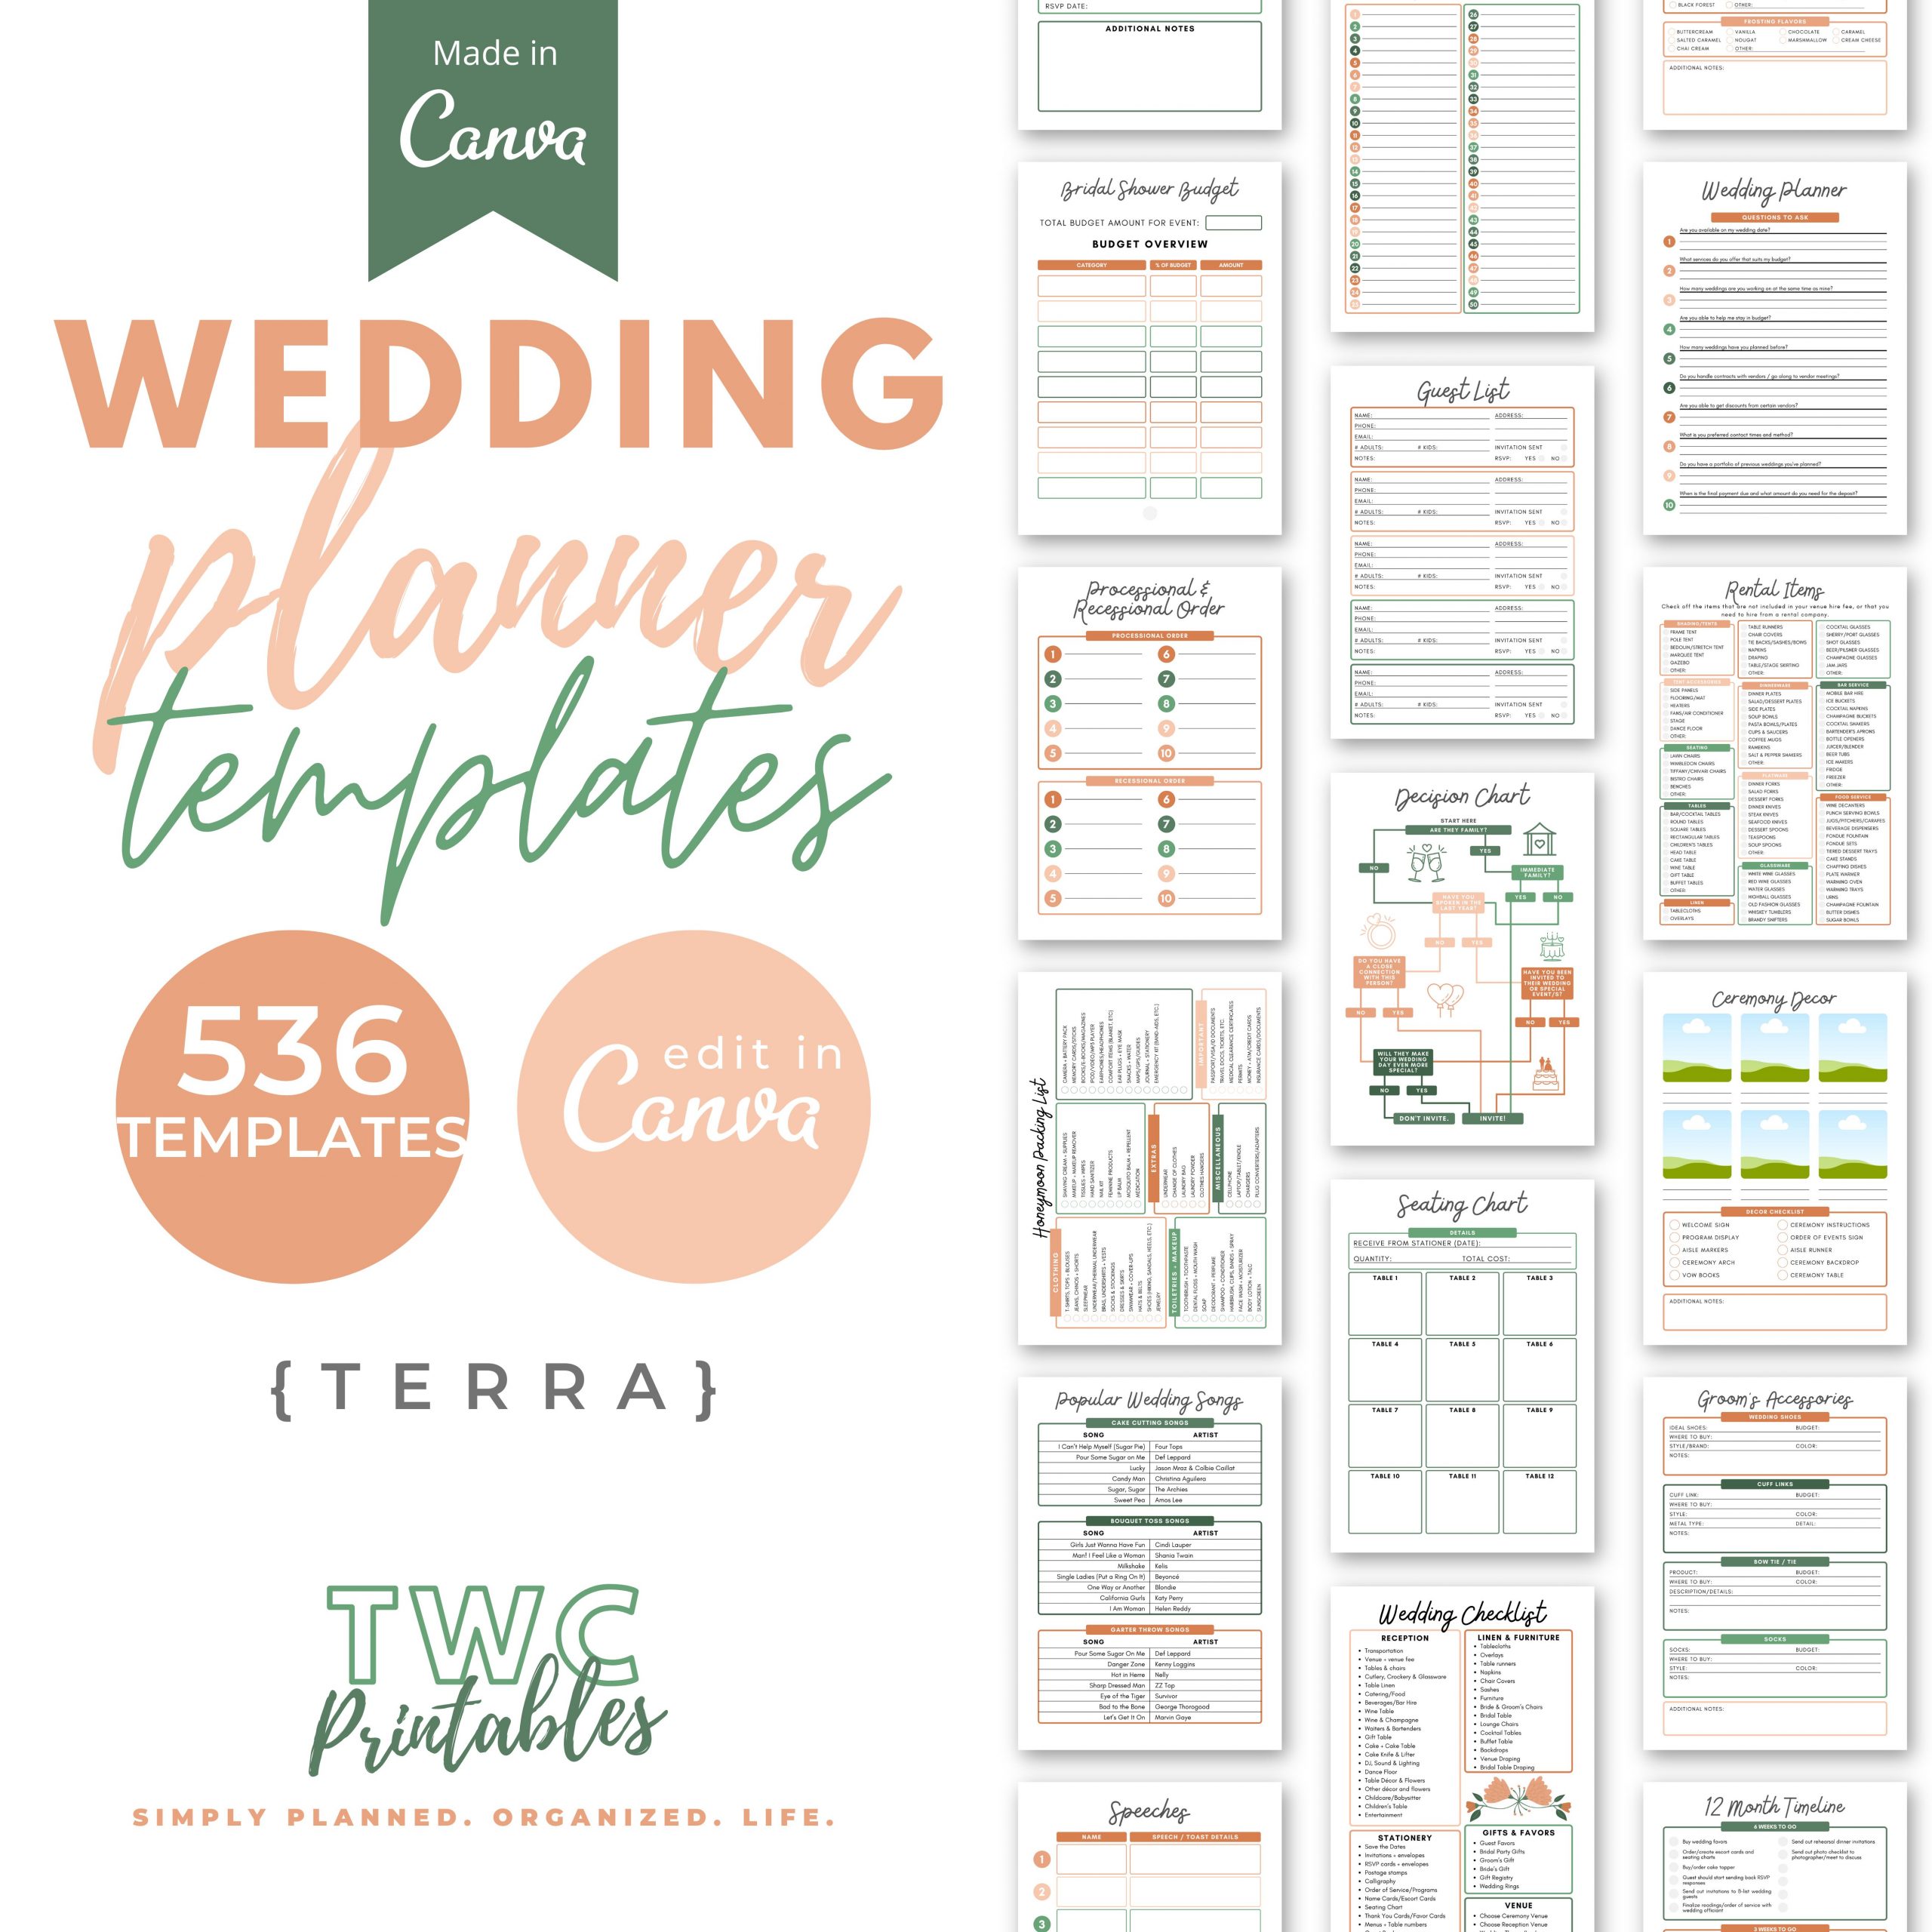 Terra wedding planner templates for Canva - The Wedding Shop - The Wedding Club